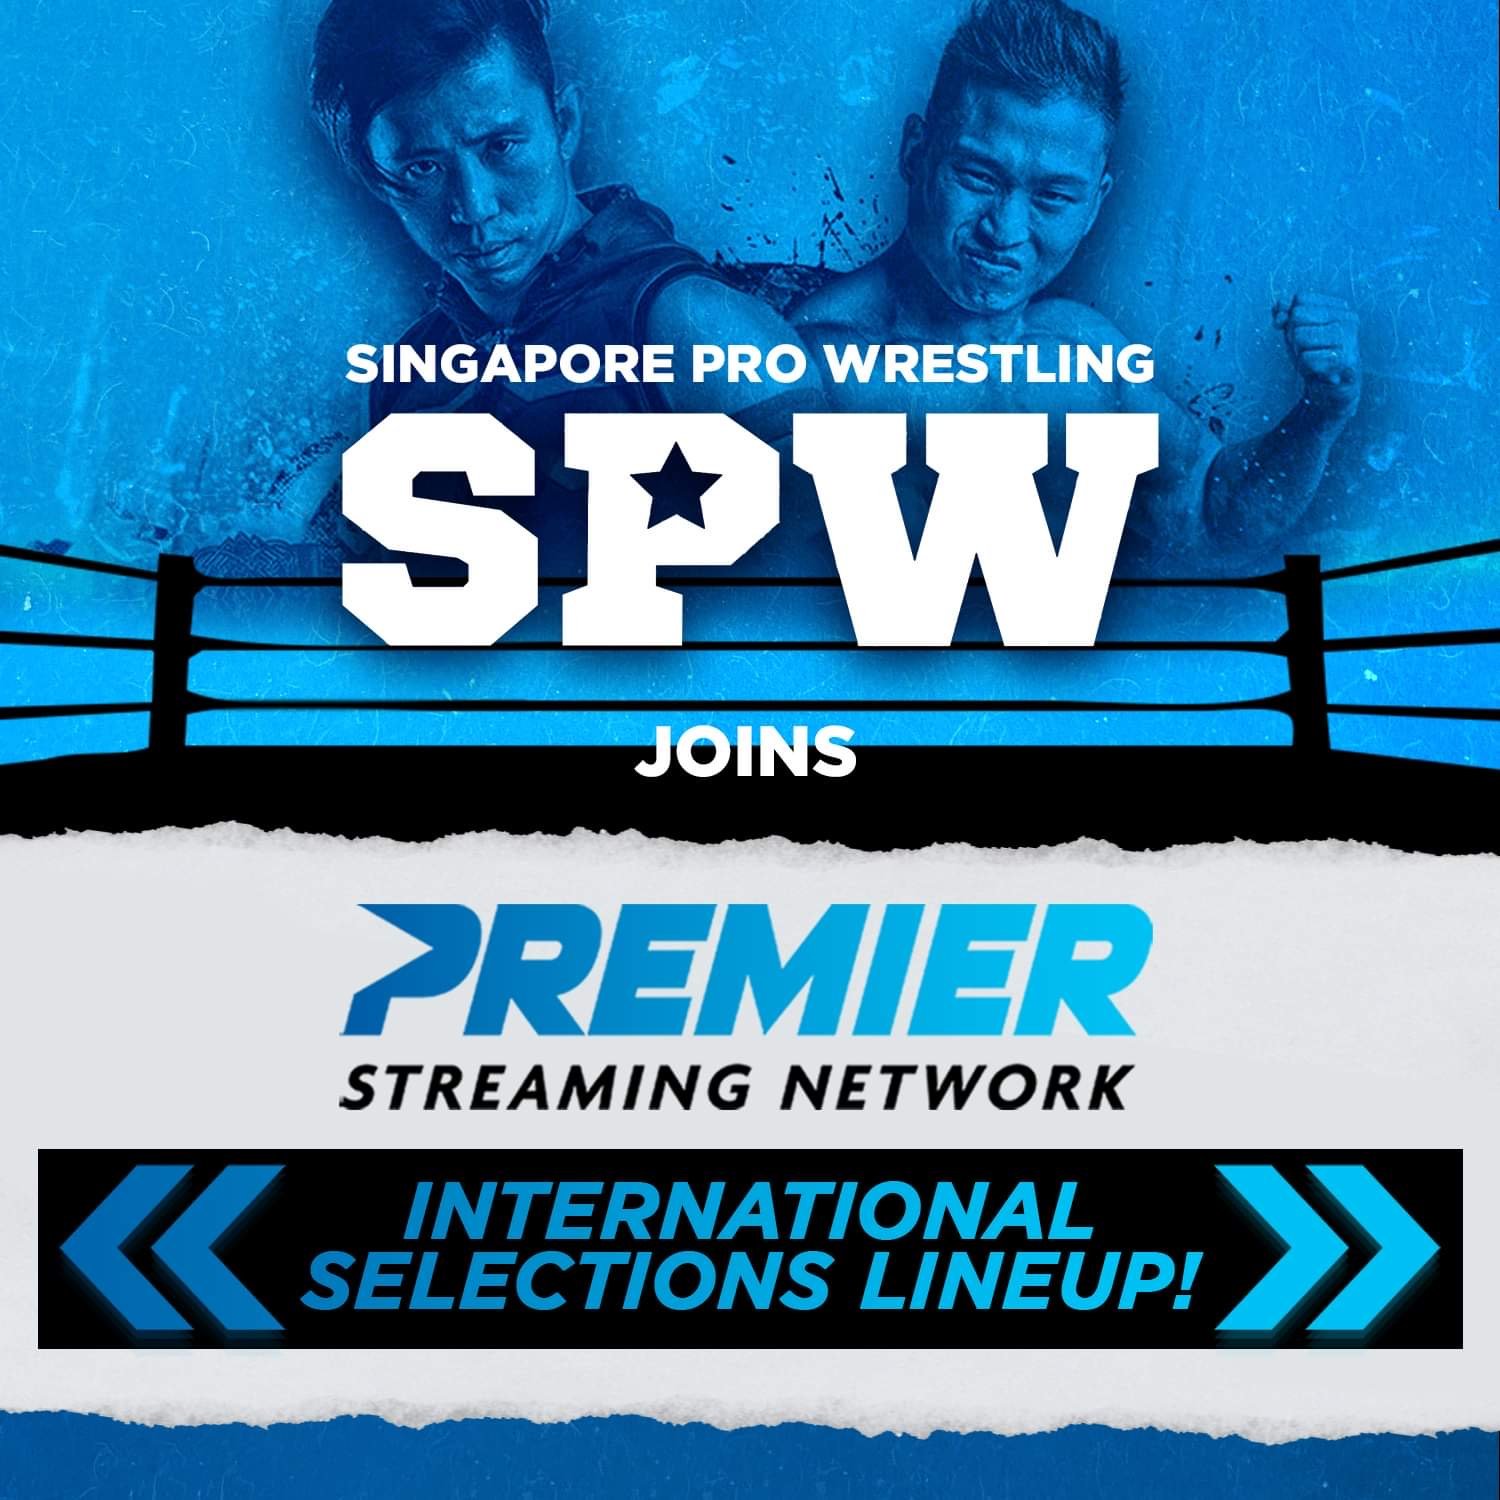 Singapore Pro Wrestling joins Premier Streaming Network